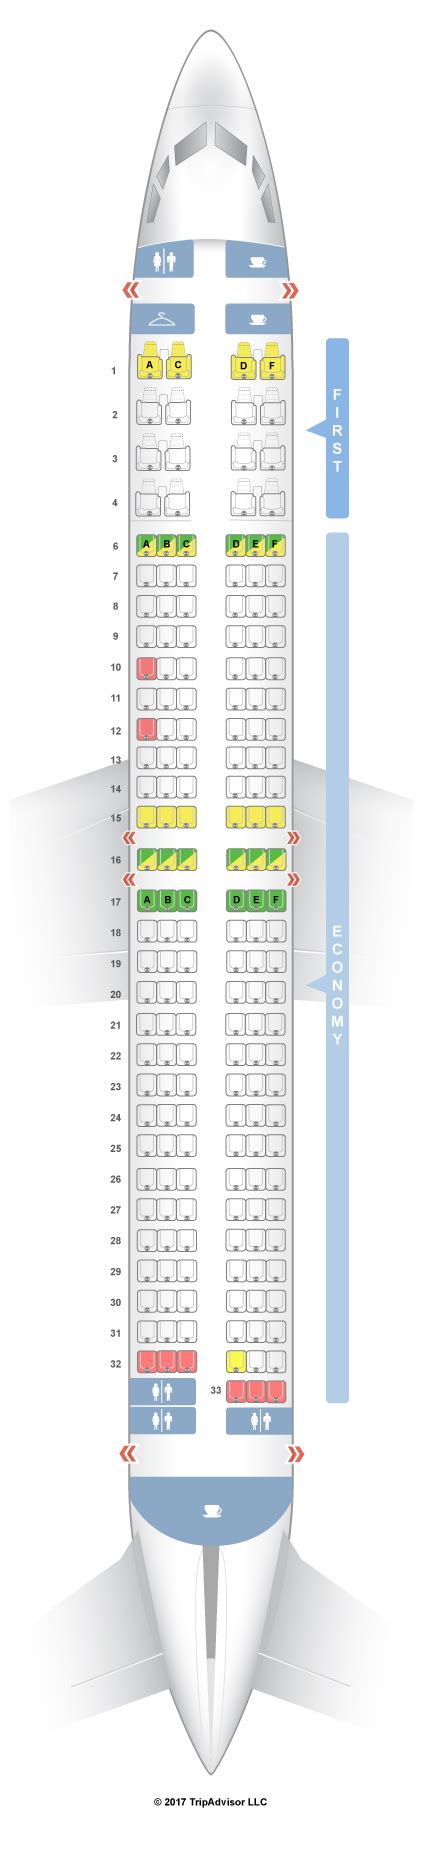 boeing 737-900 seating chart alaska